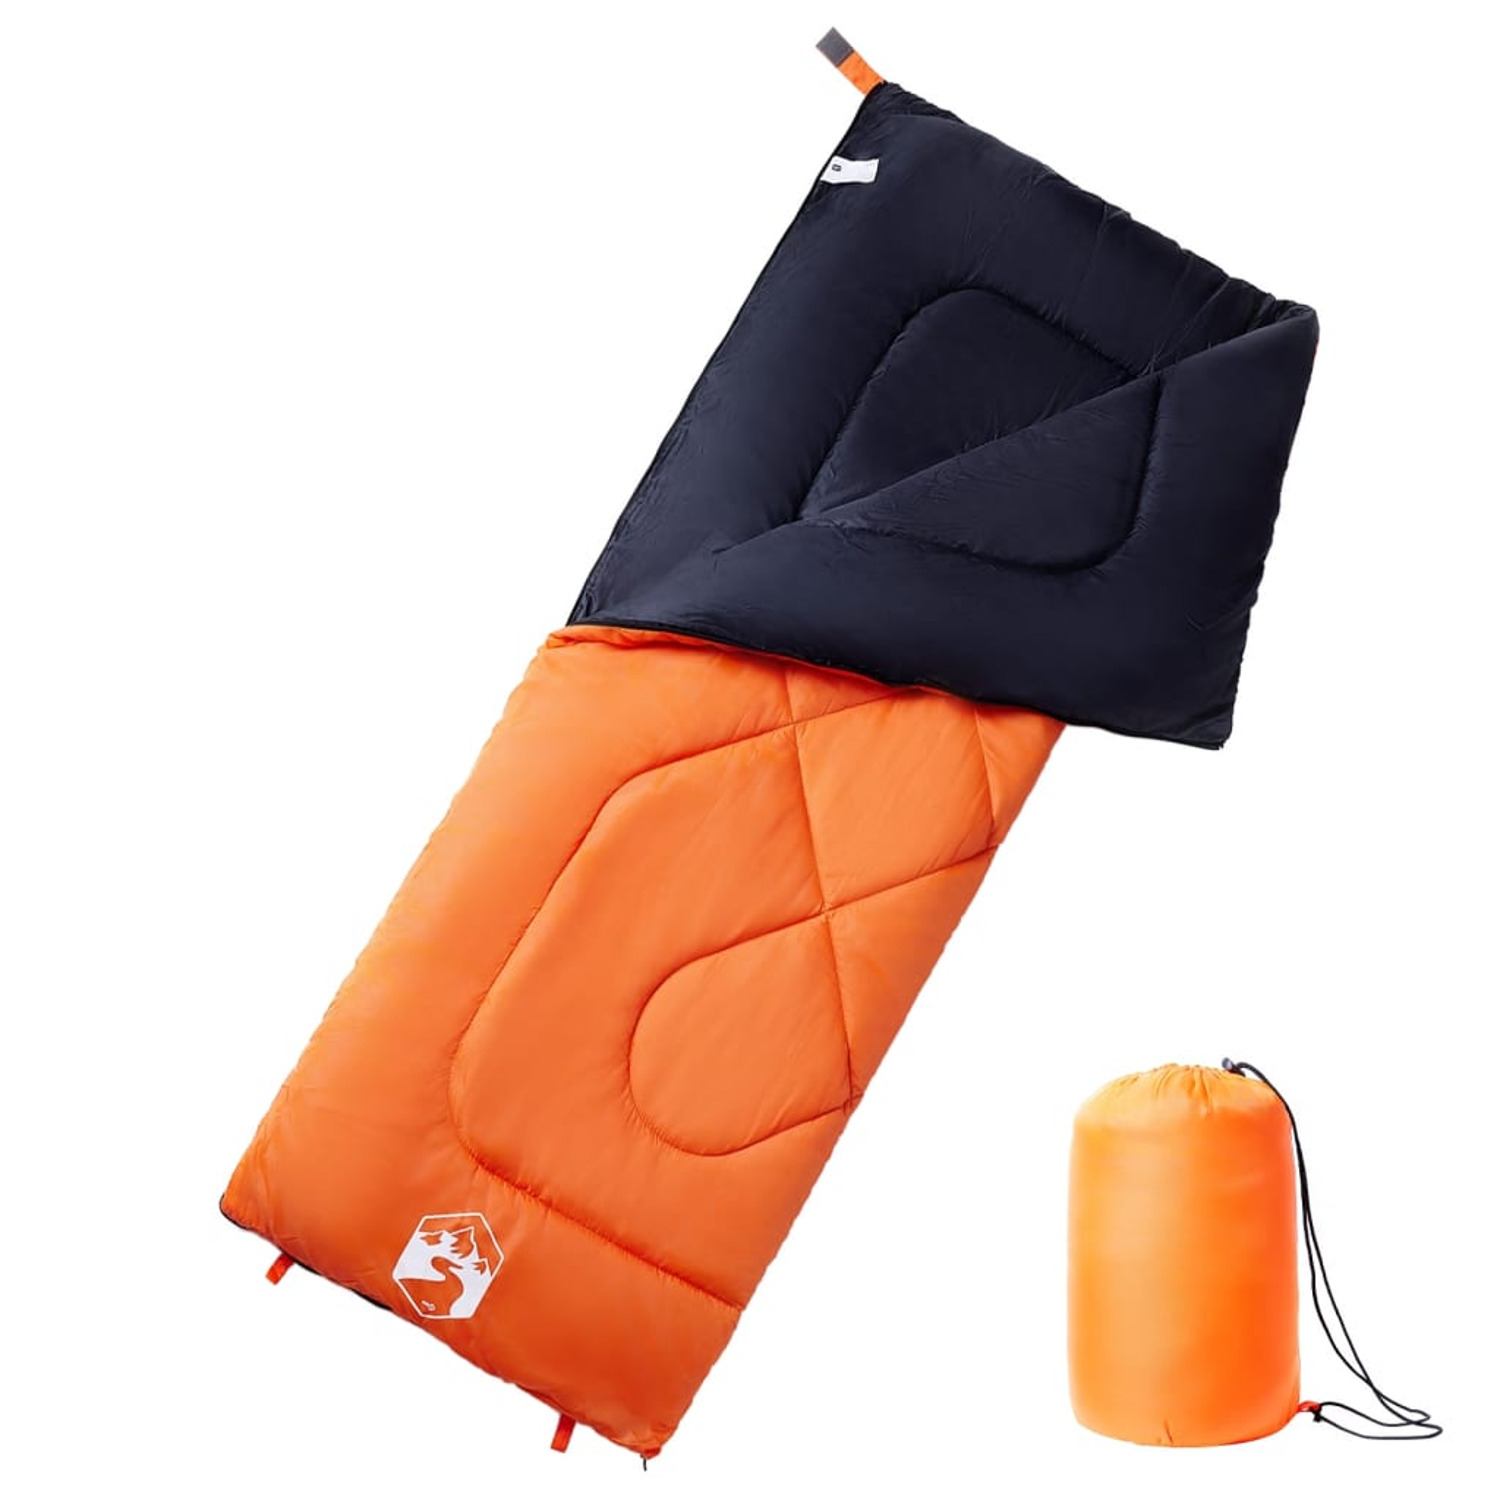 Saco De Dormir De Camping Vidaxl Para Adultos 190 X 72 Cm - naranja-negro - 